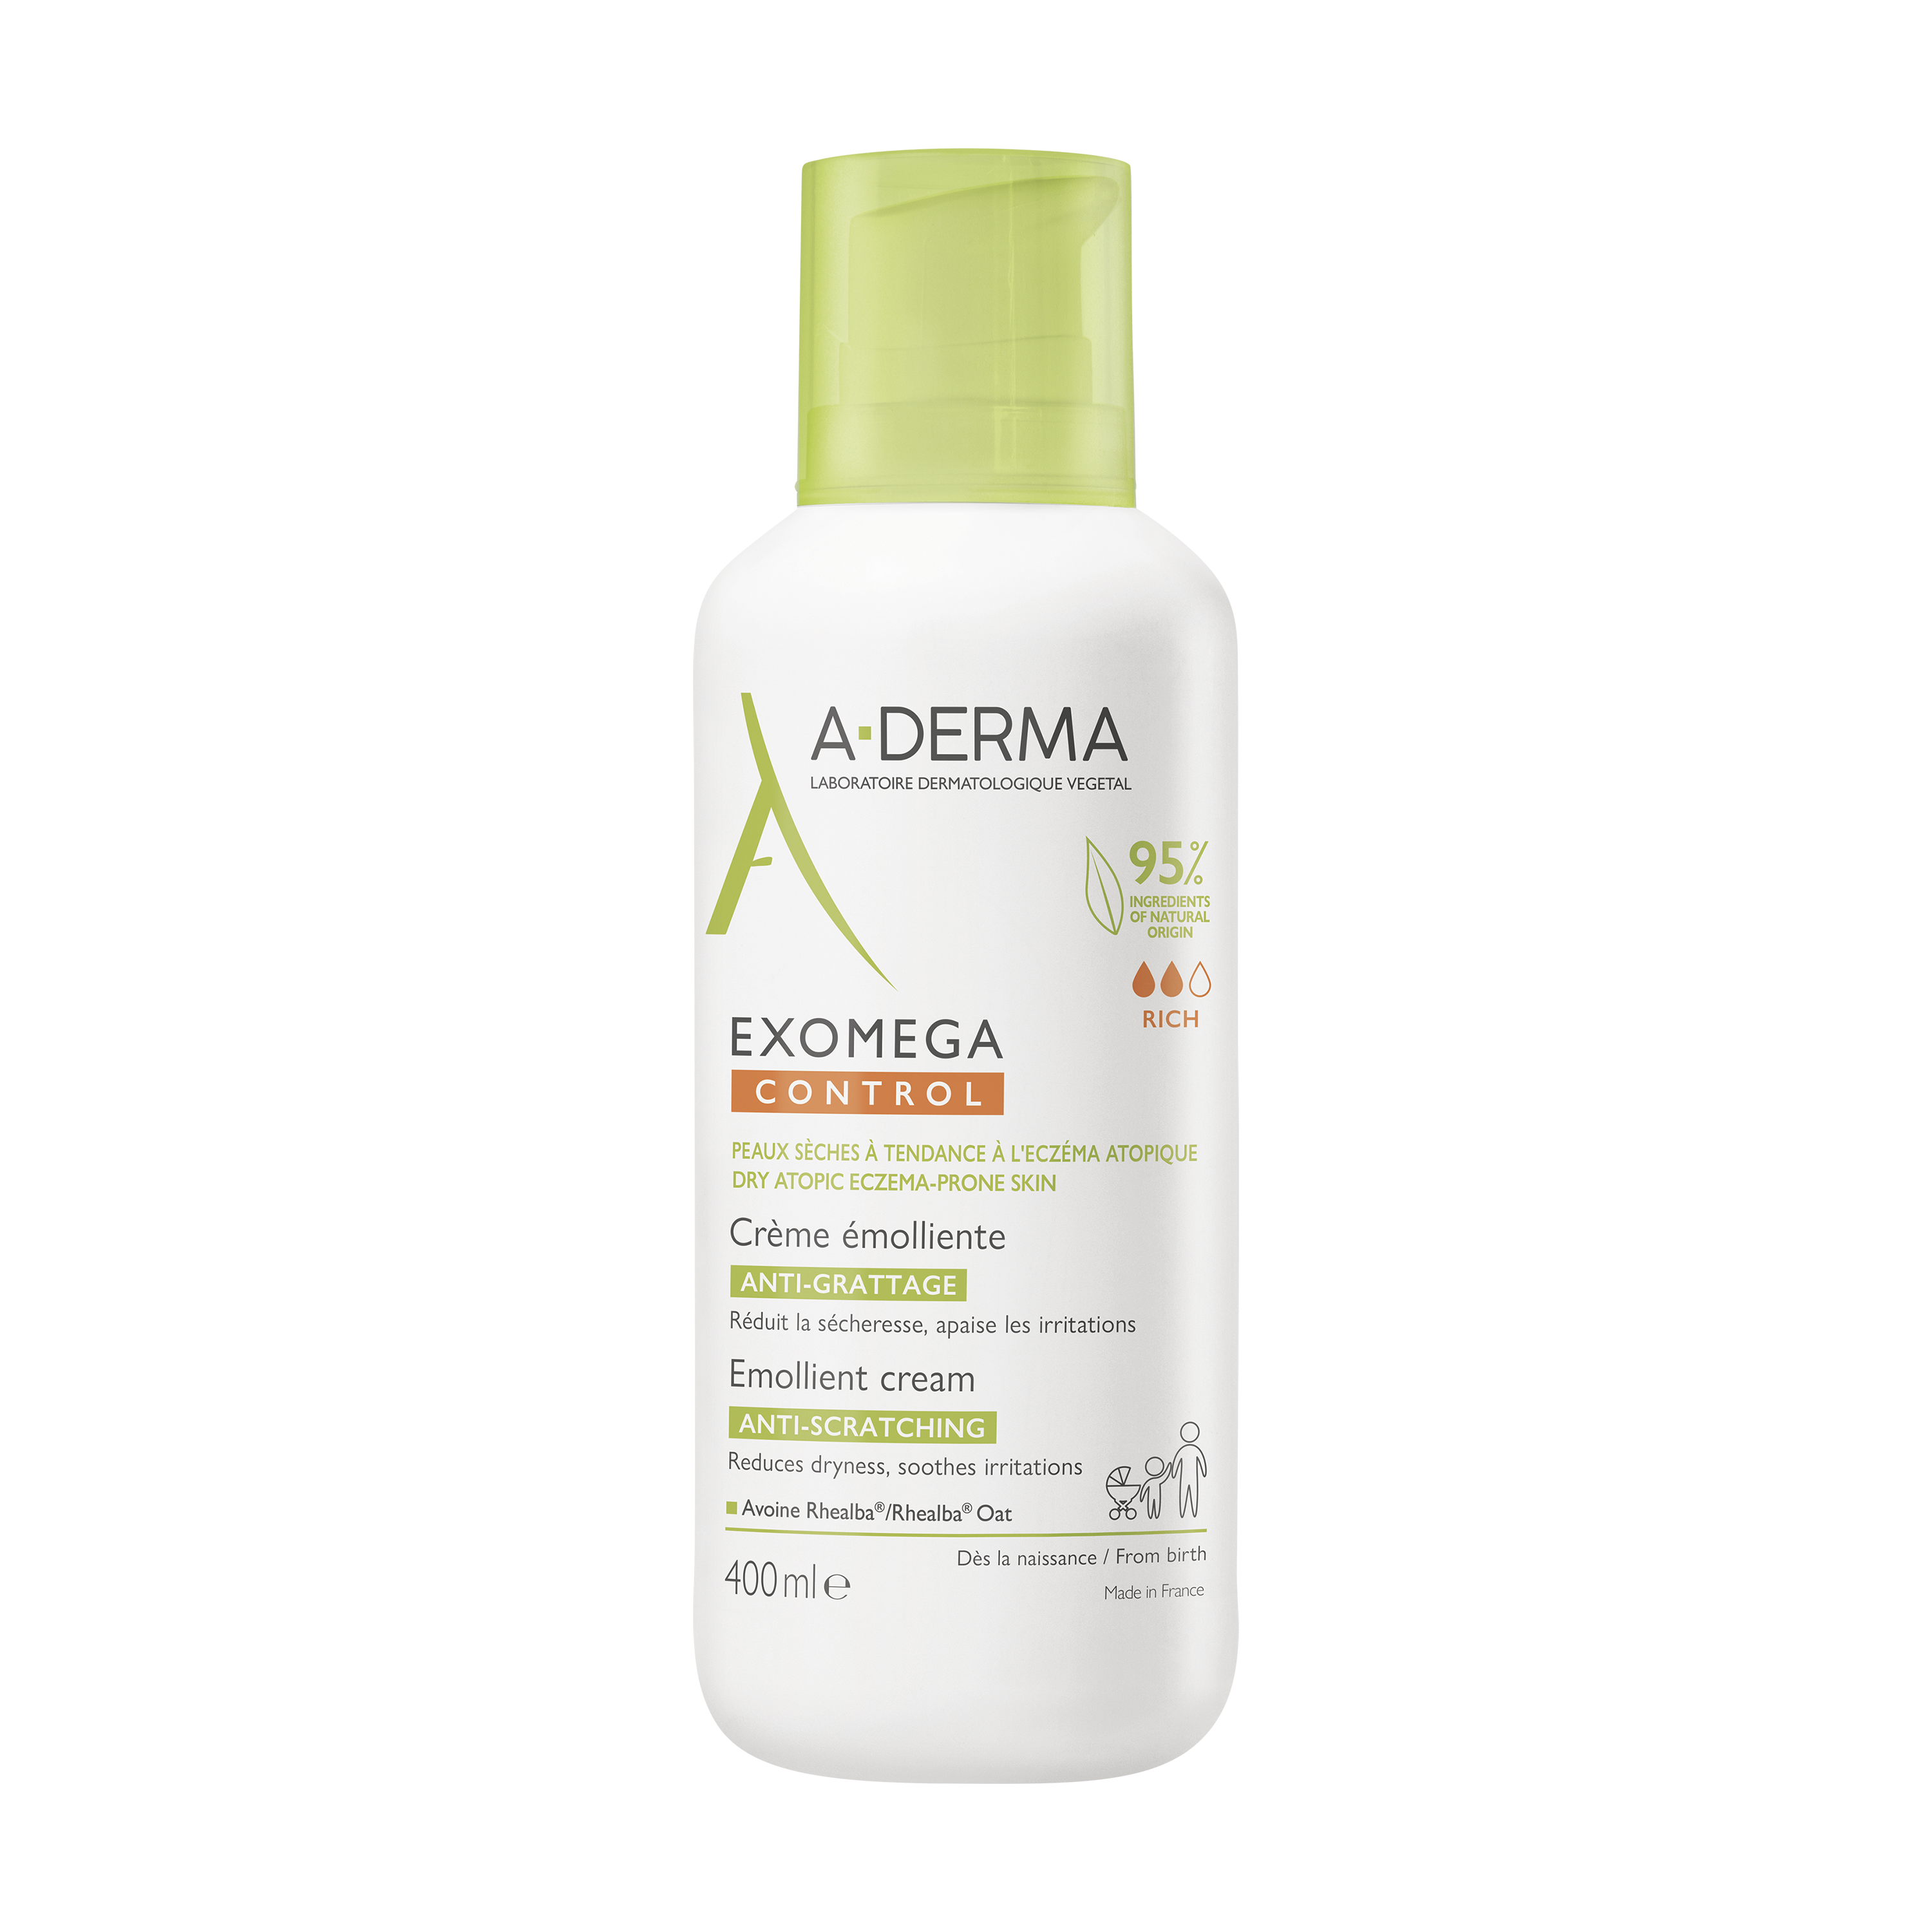 A-Derma A-Derma Exomega Control Cream, 400 ml